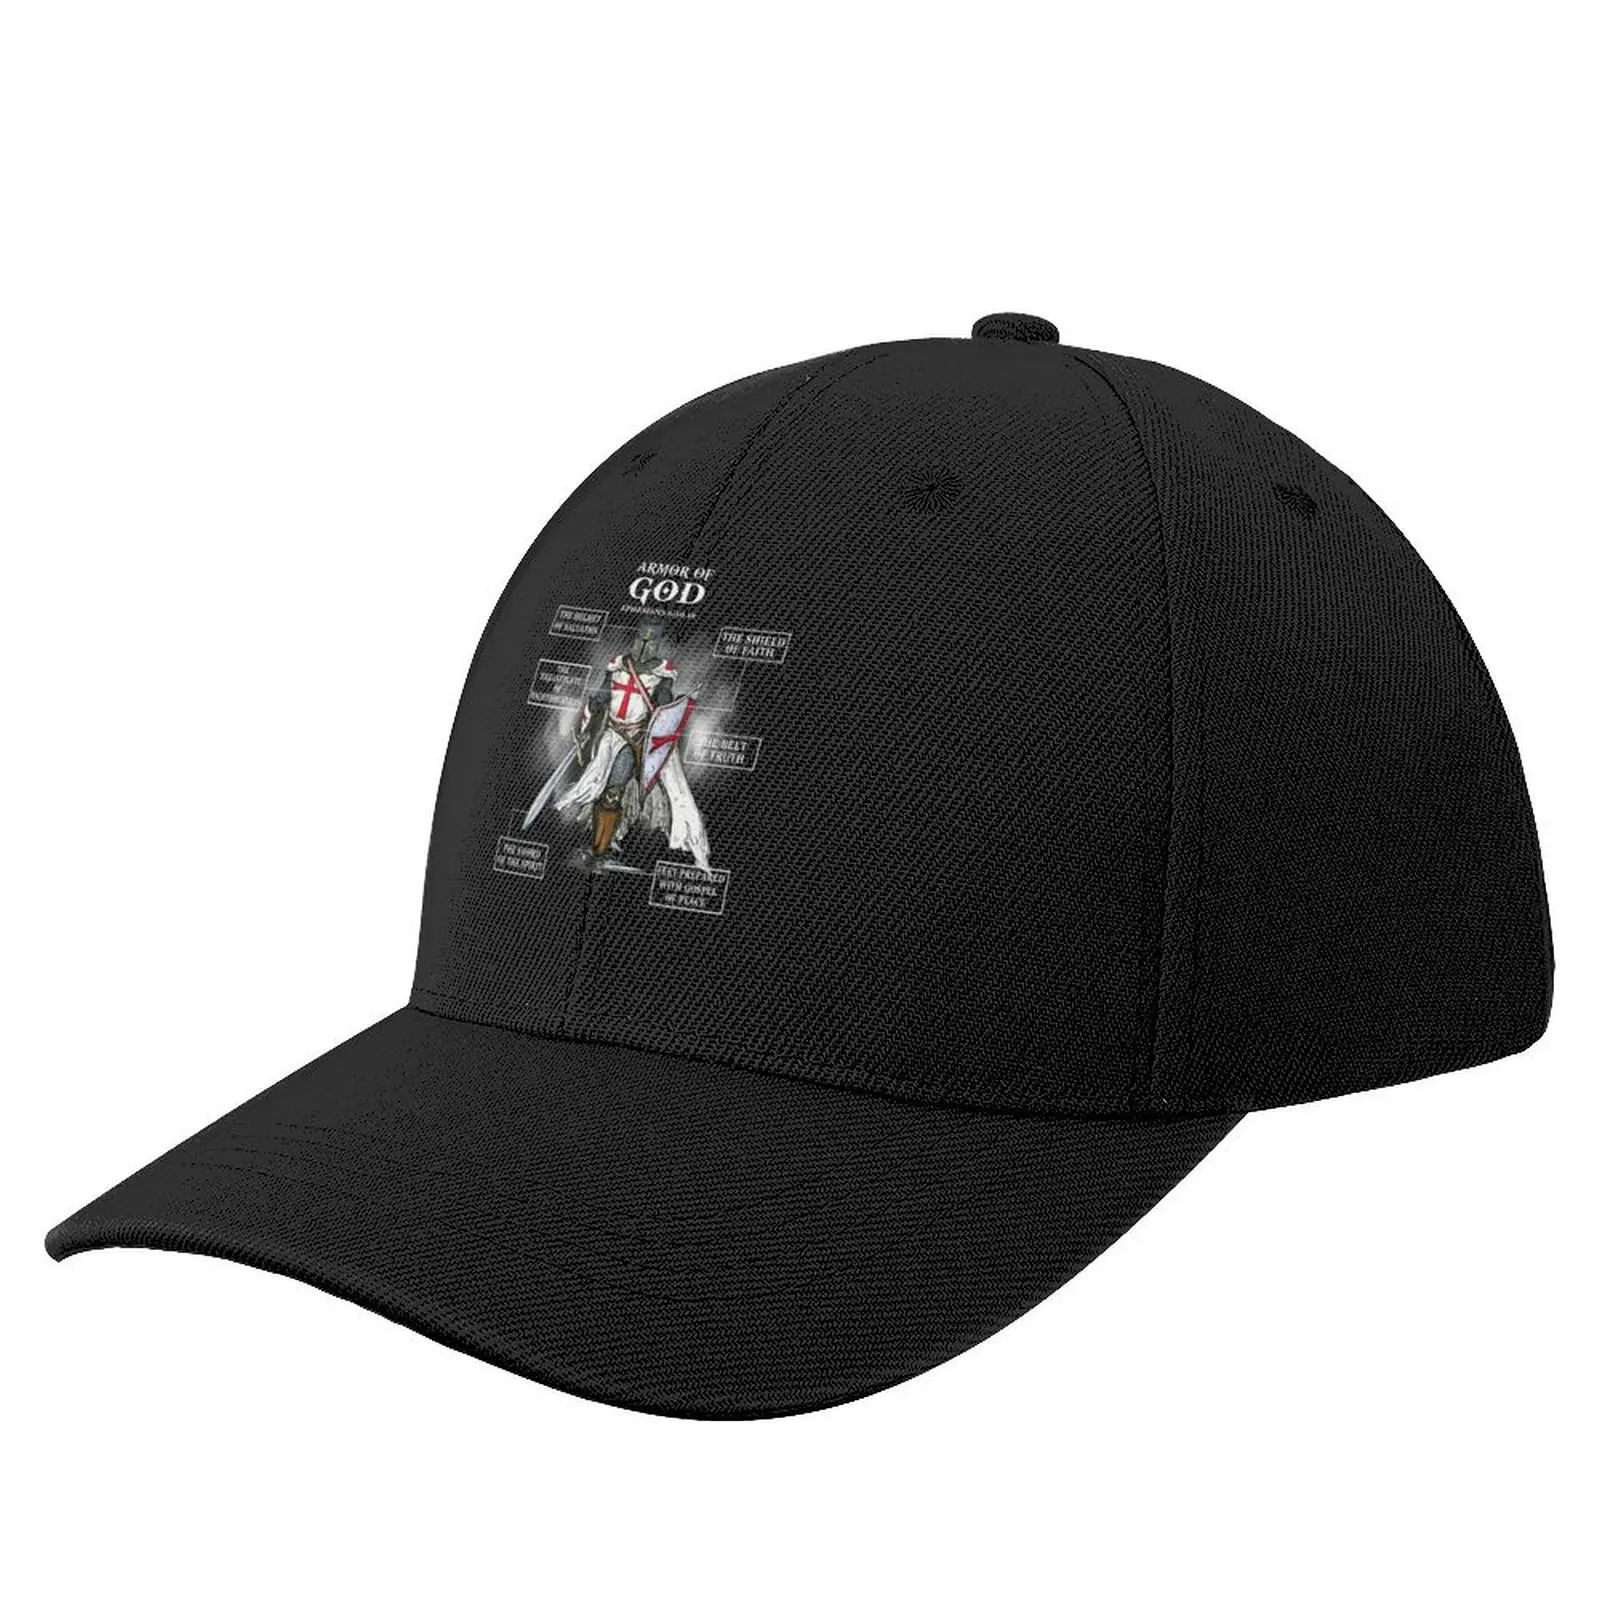 

armor of god bible verse great religious christian Baseball Cap Sun Hat For Children Big Size Hat For Women Men's